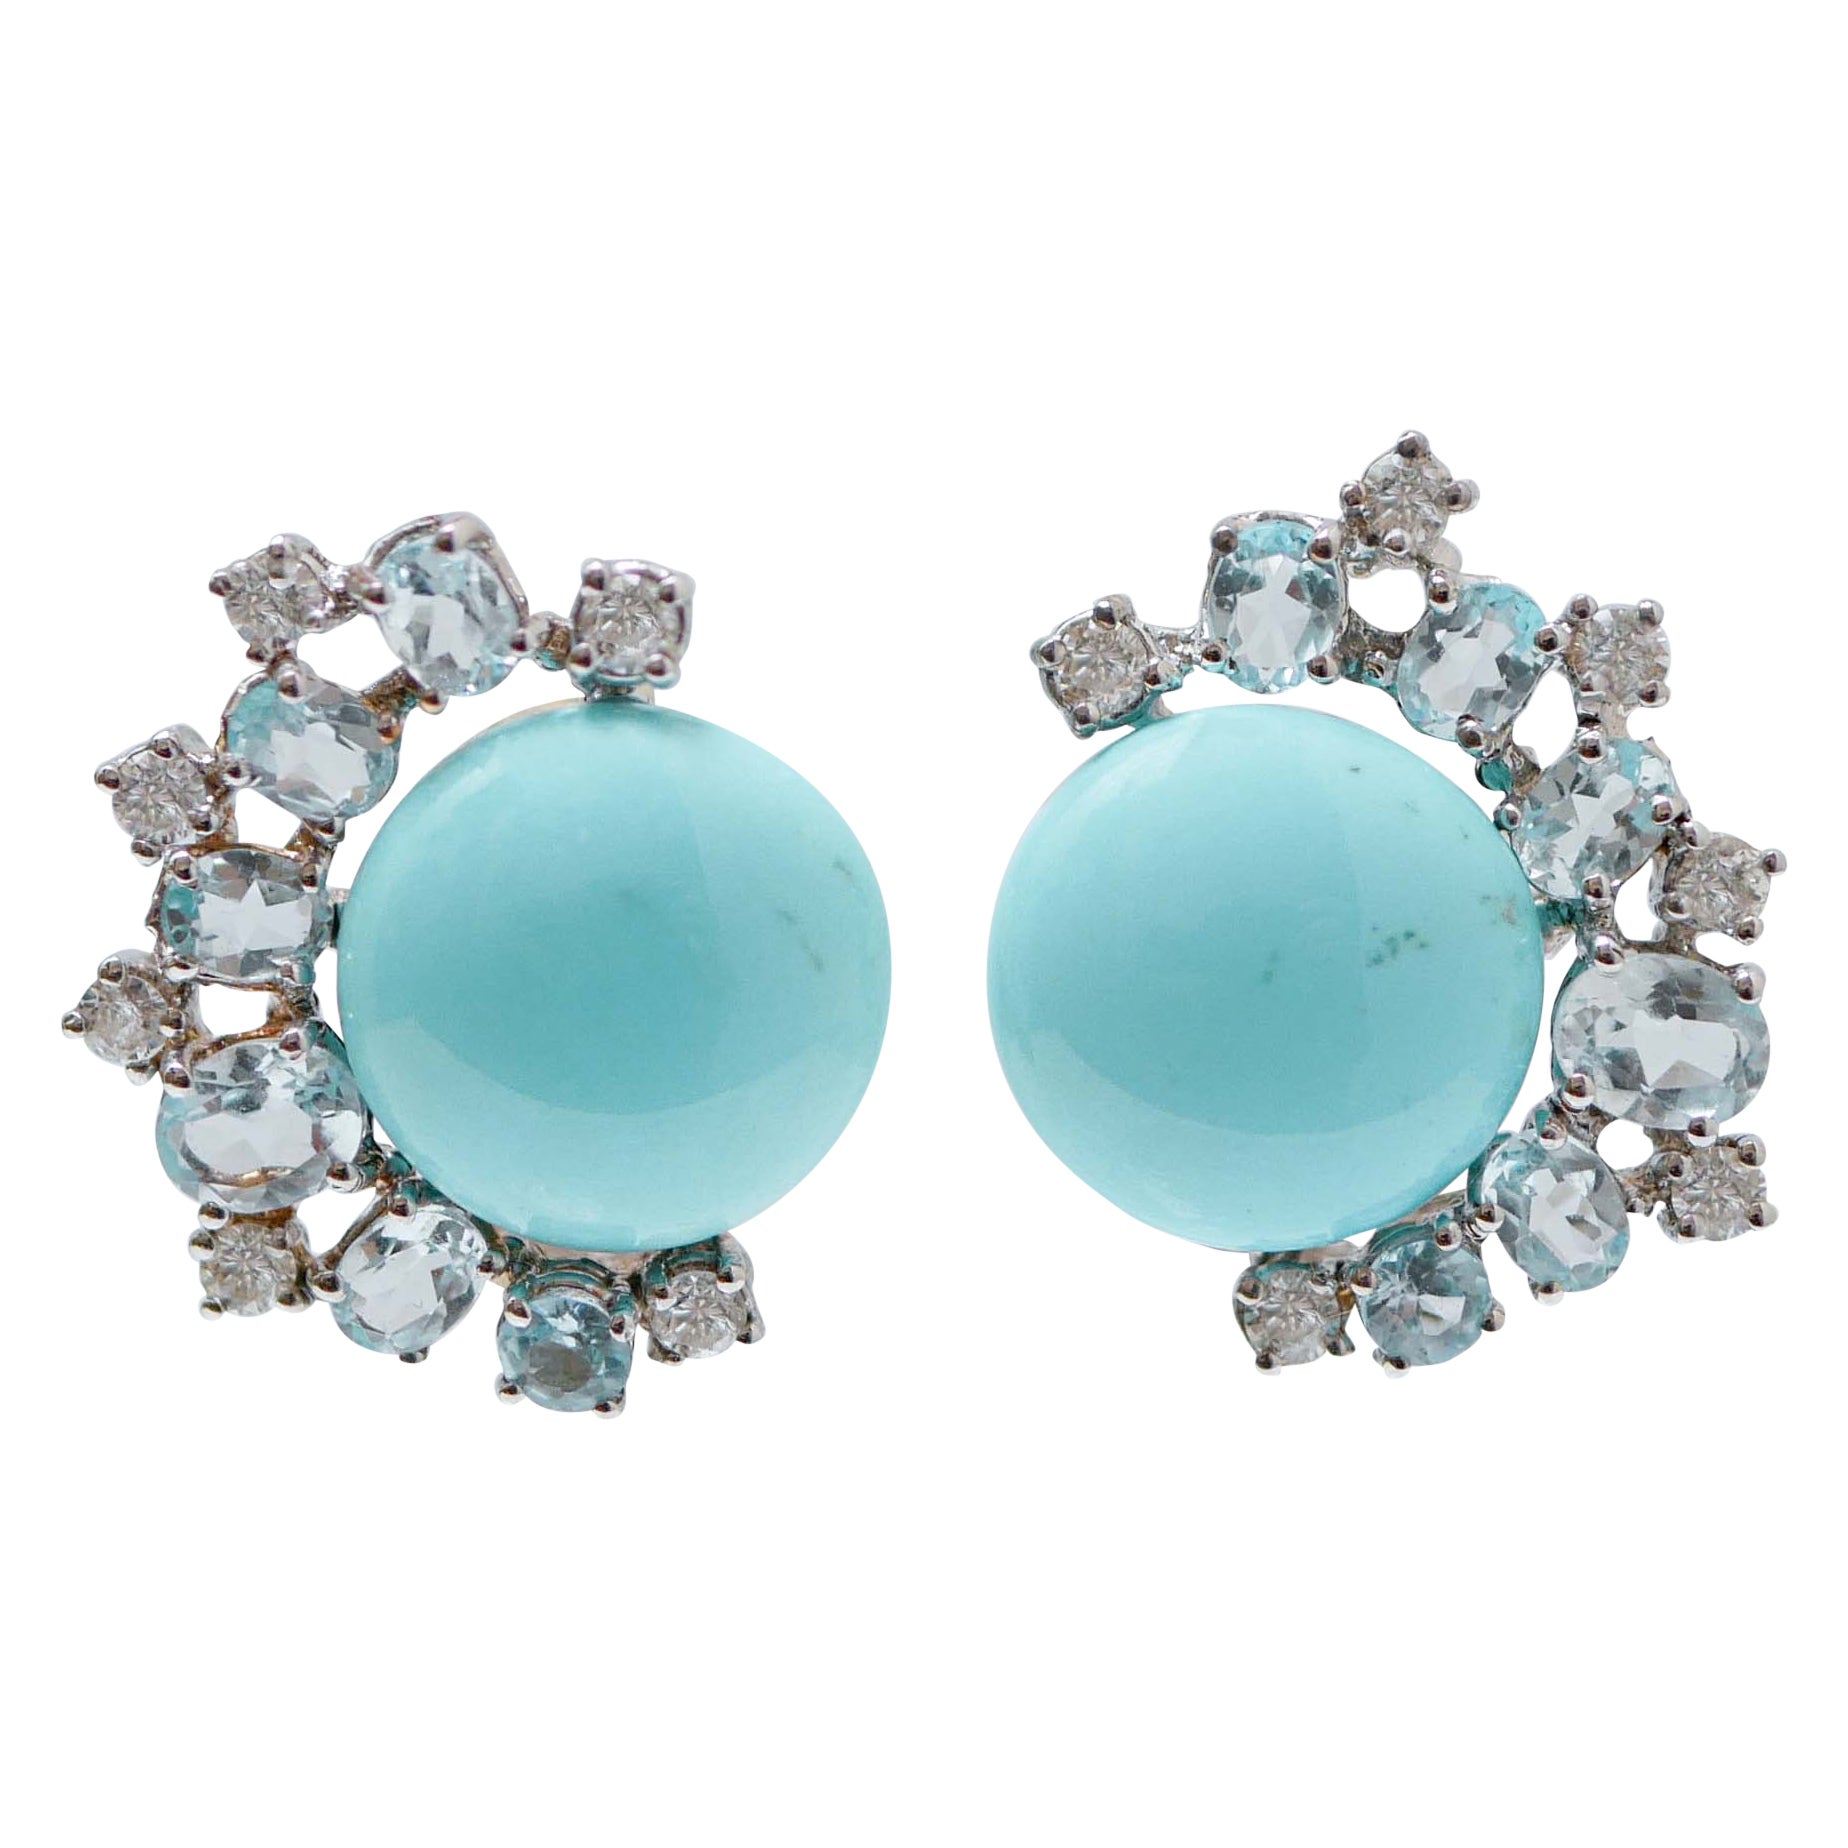 Turquoise, Aquamarine, Diamonds, 18 Karat White Gold and Rose Gold Earrings.